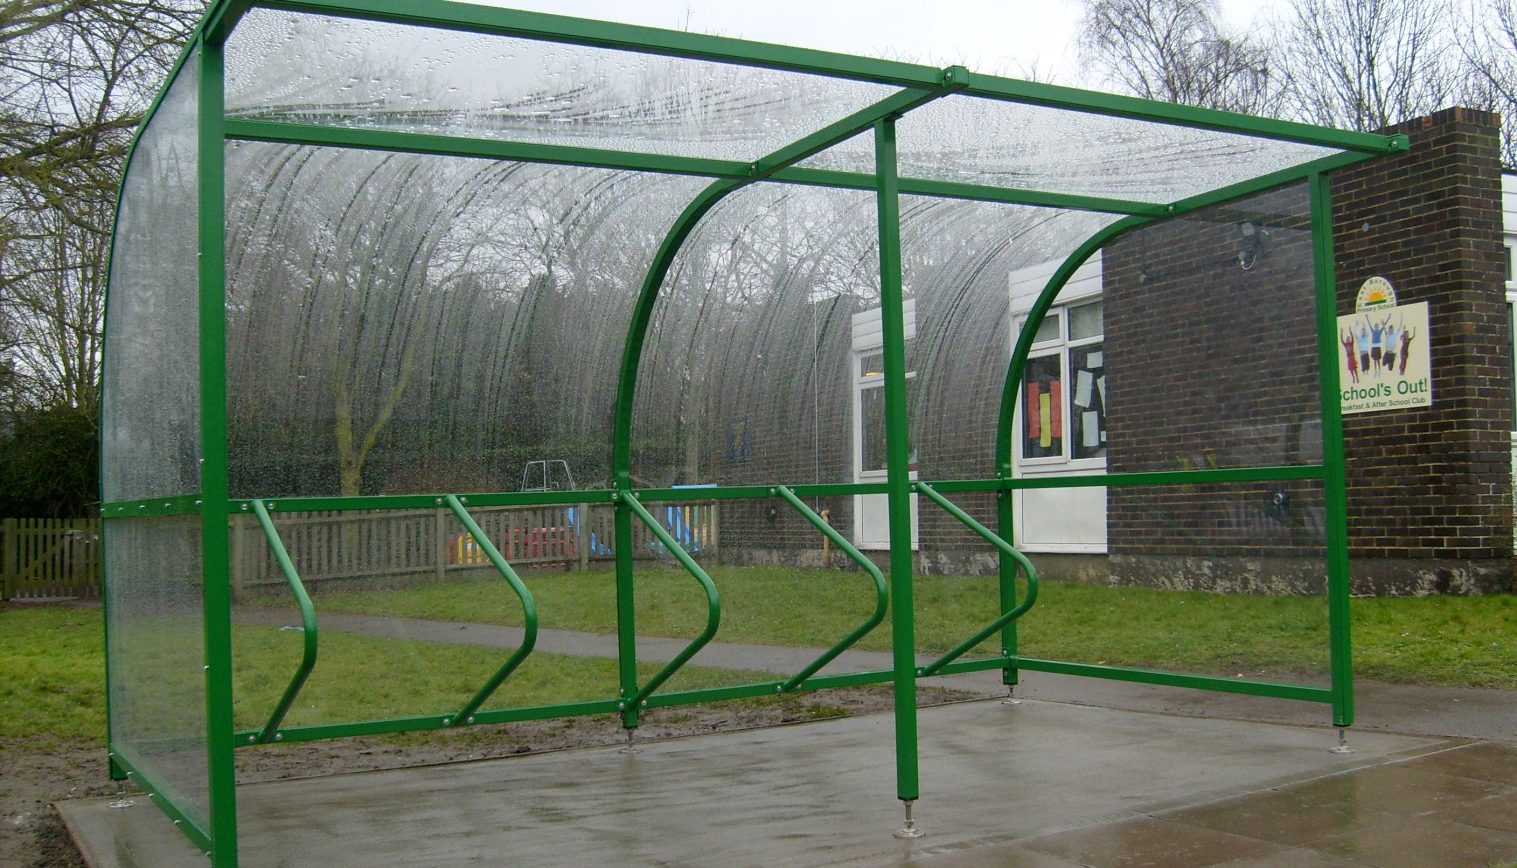 East Borough Primary School – Second Installation